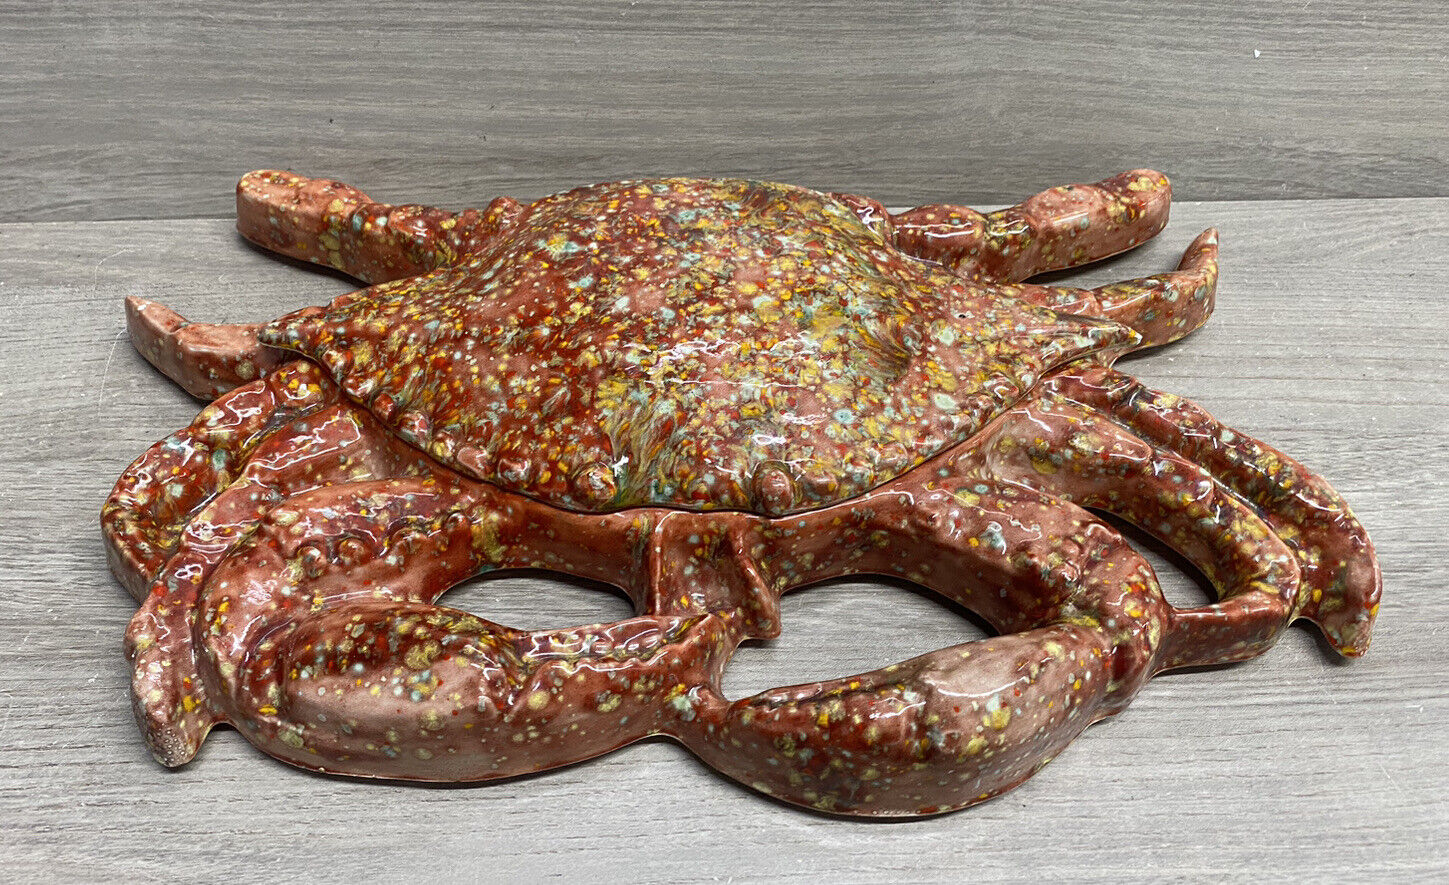 VTG Crab Lidded Ceramic Dish Jewelry Holder Decor Trinket Box Painted Tureen?